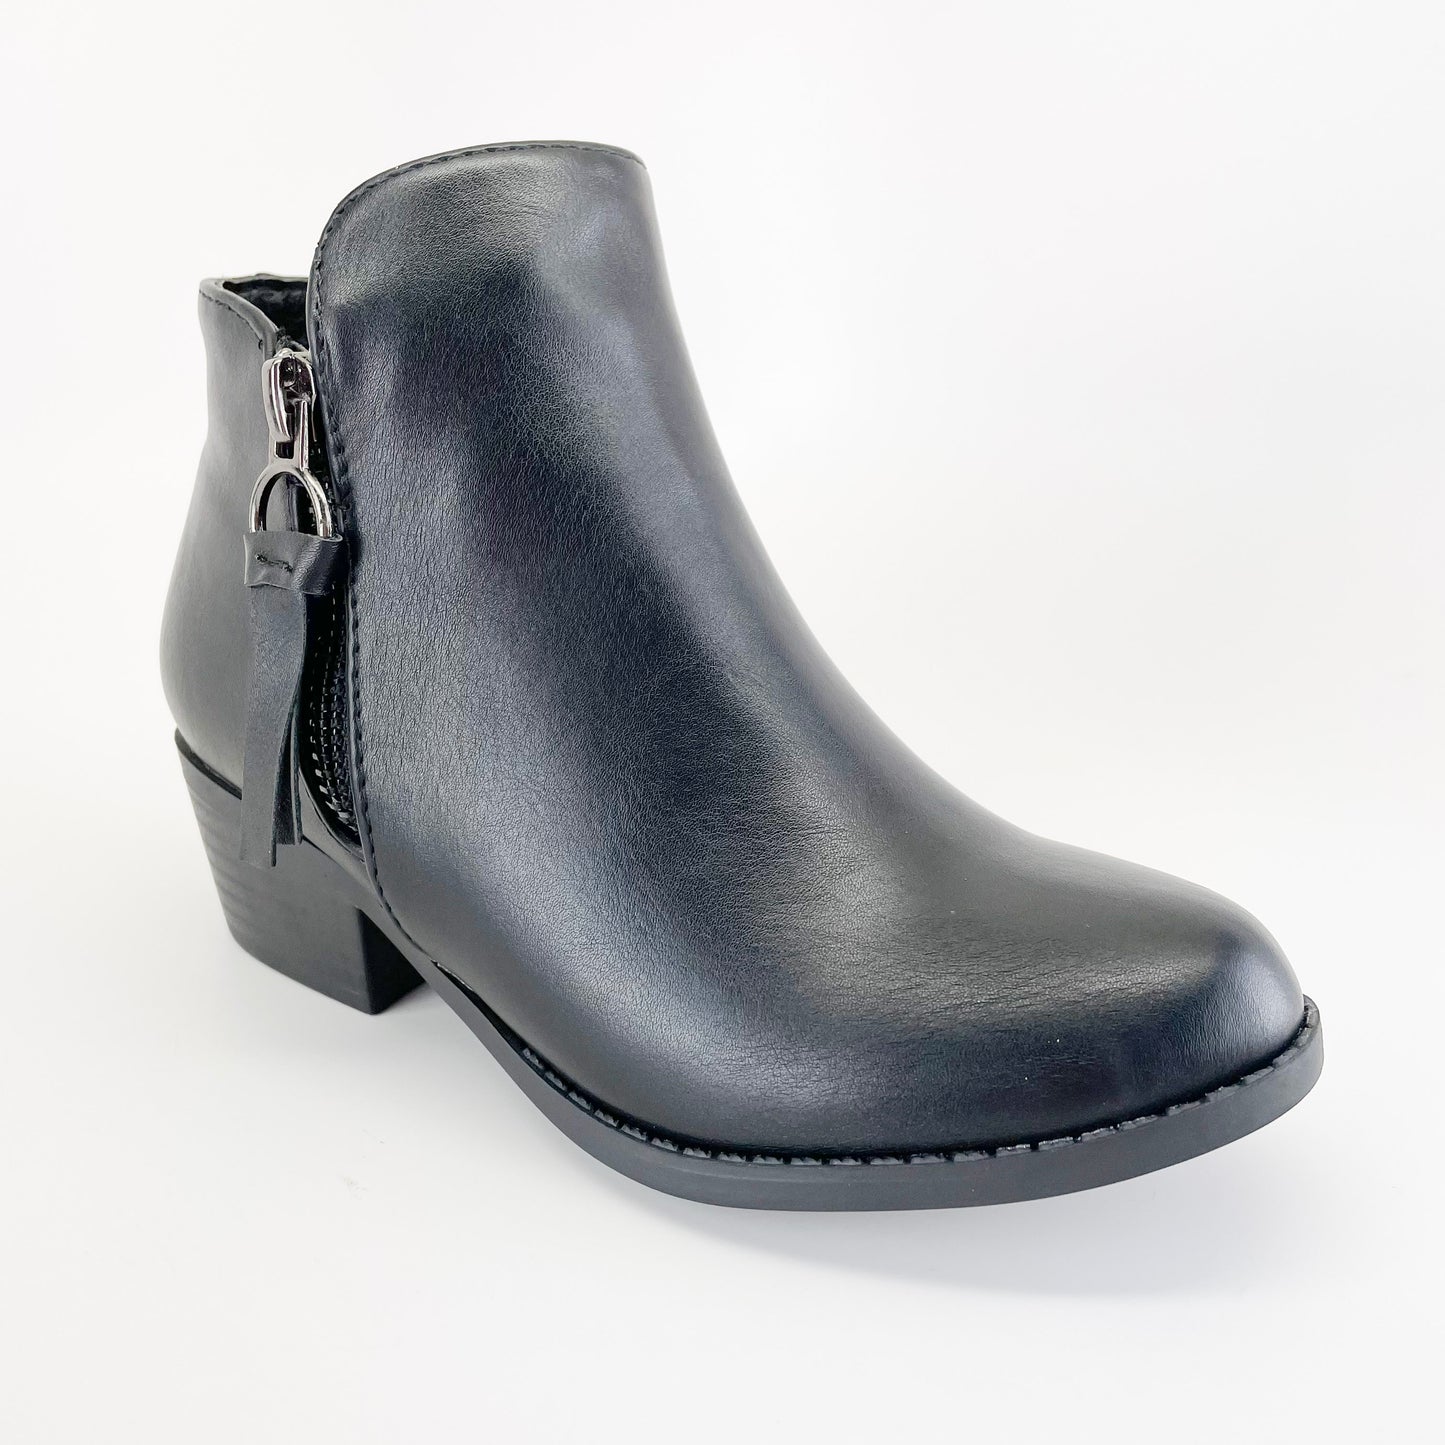 lucky top zandra-38k black girl boots with zipper closure